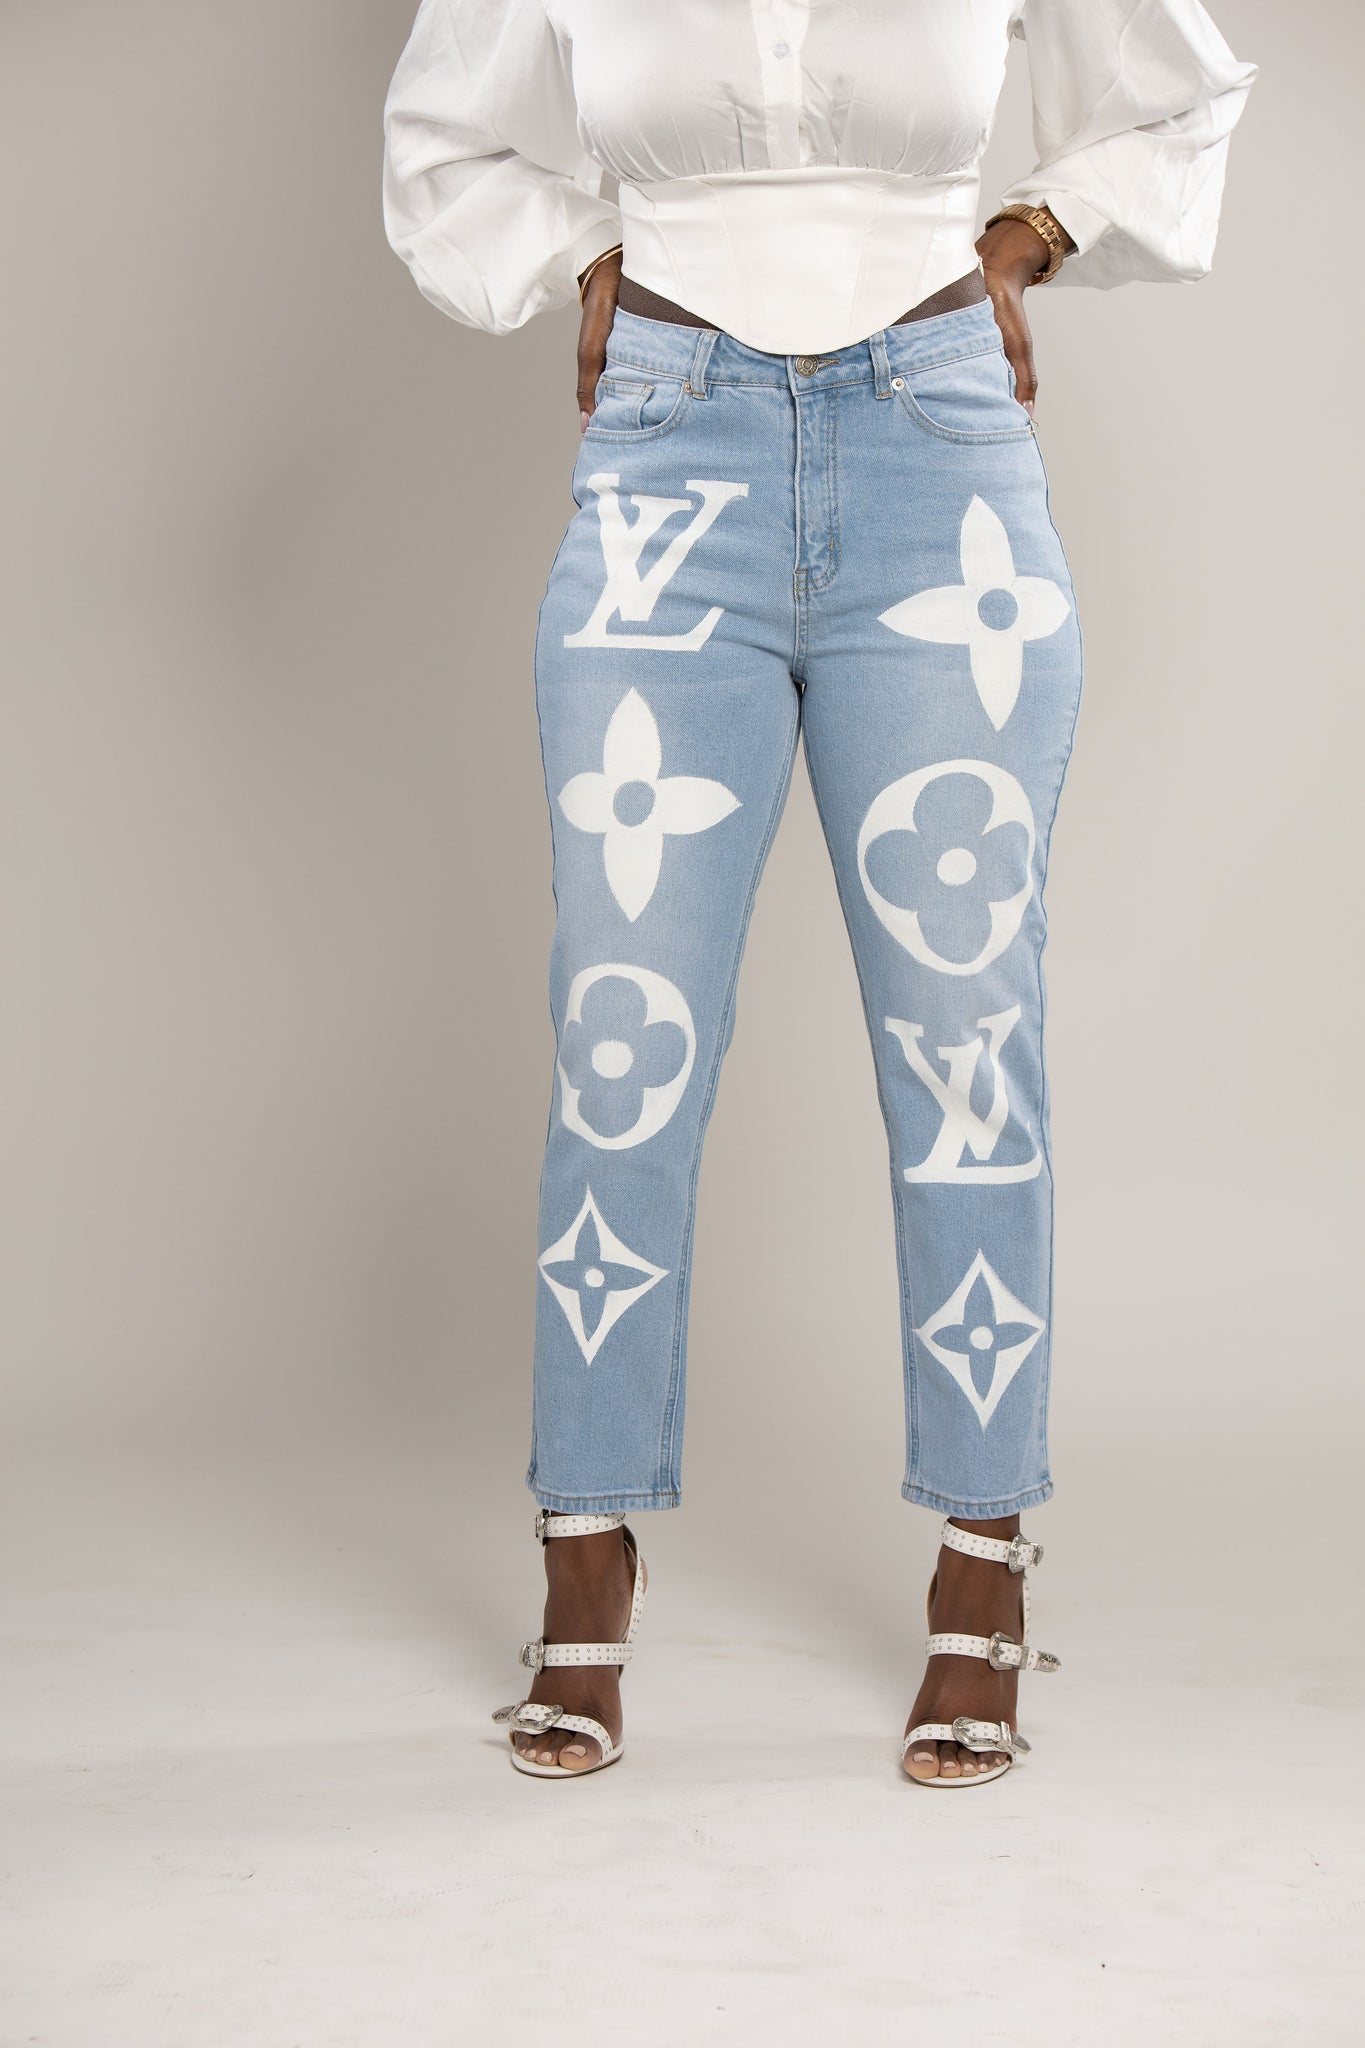 custom louis vuitton jeans